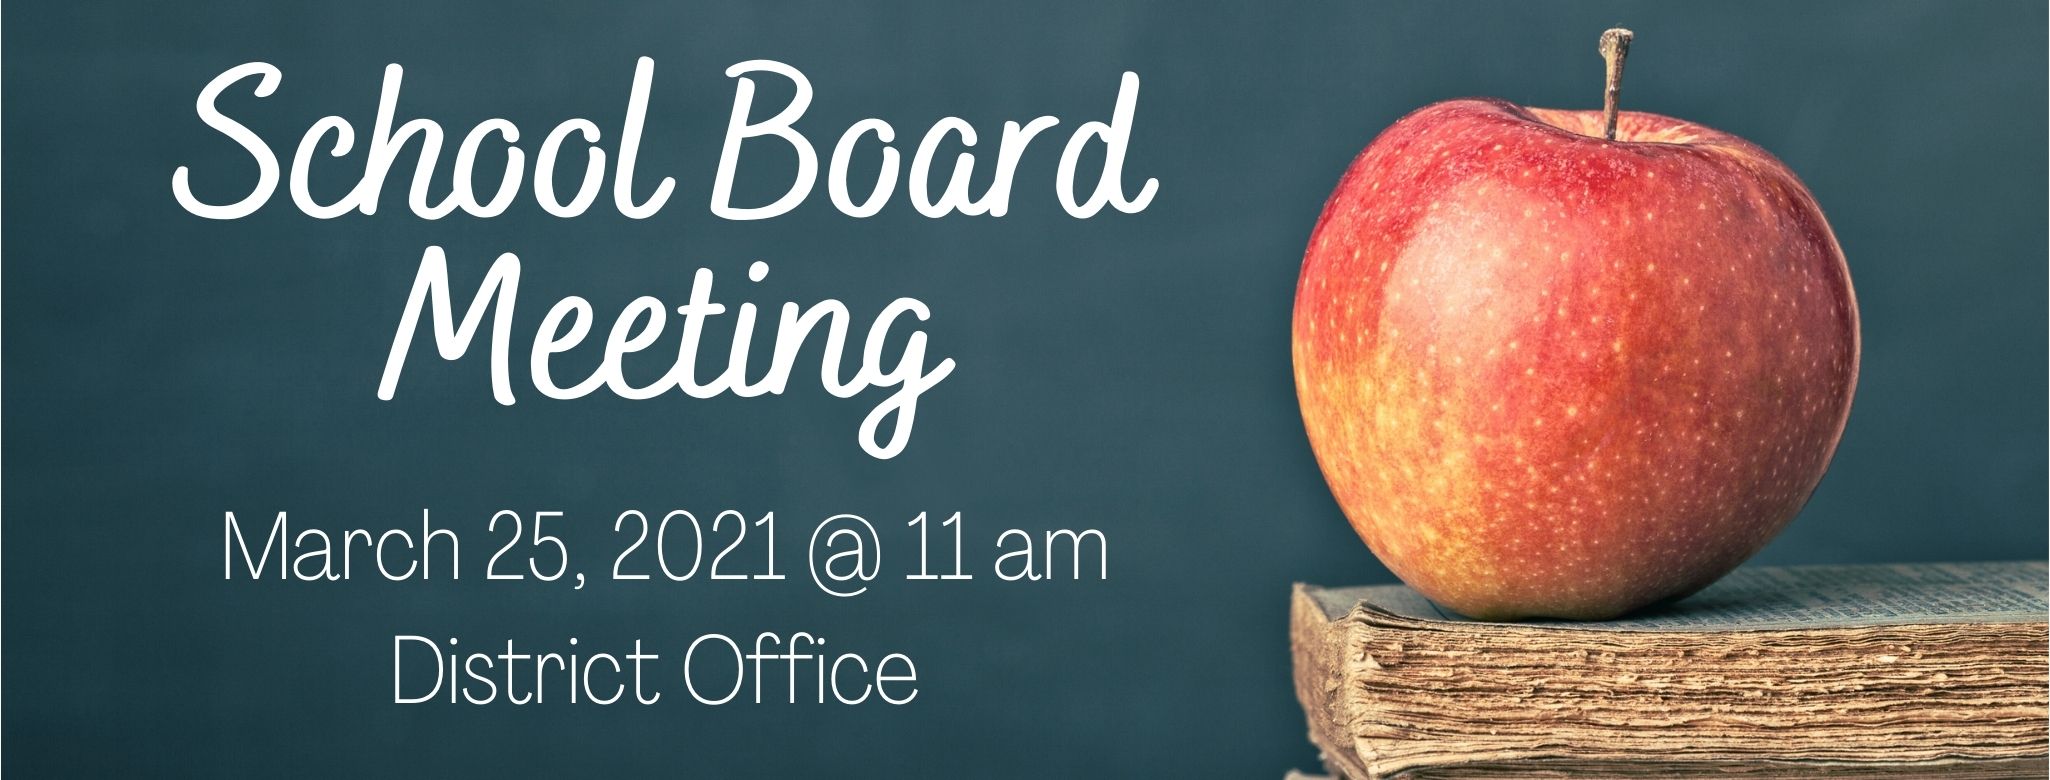 School Board Meeting 6